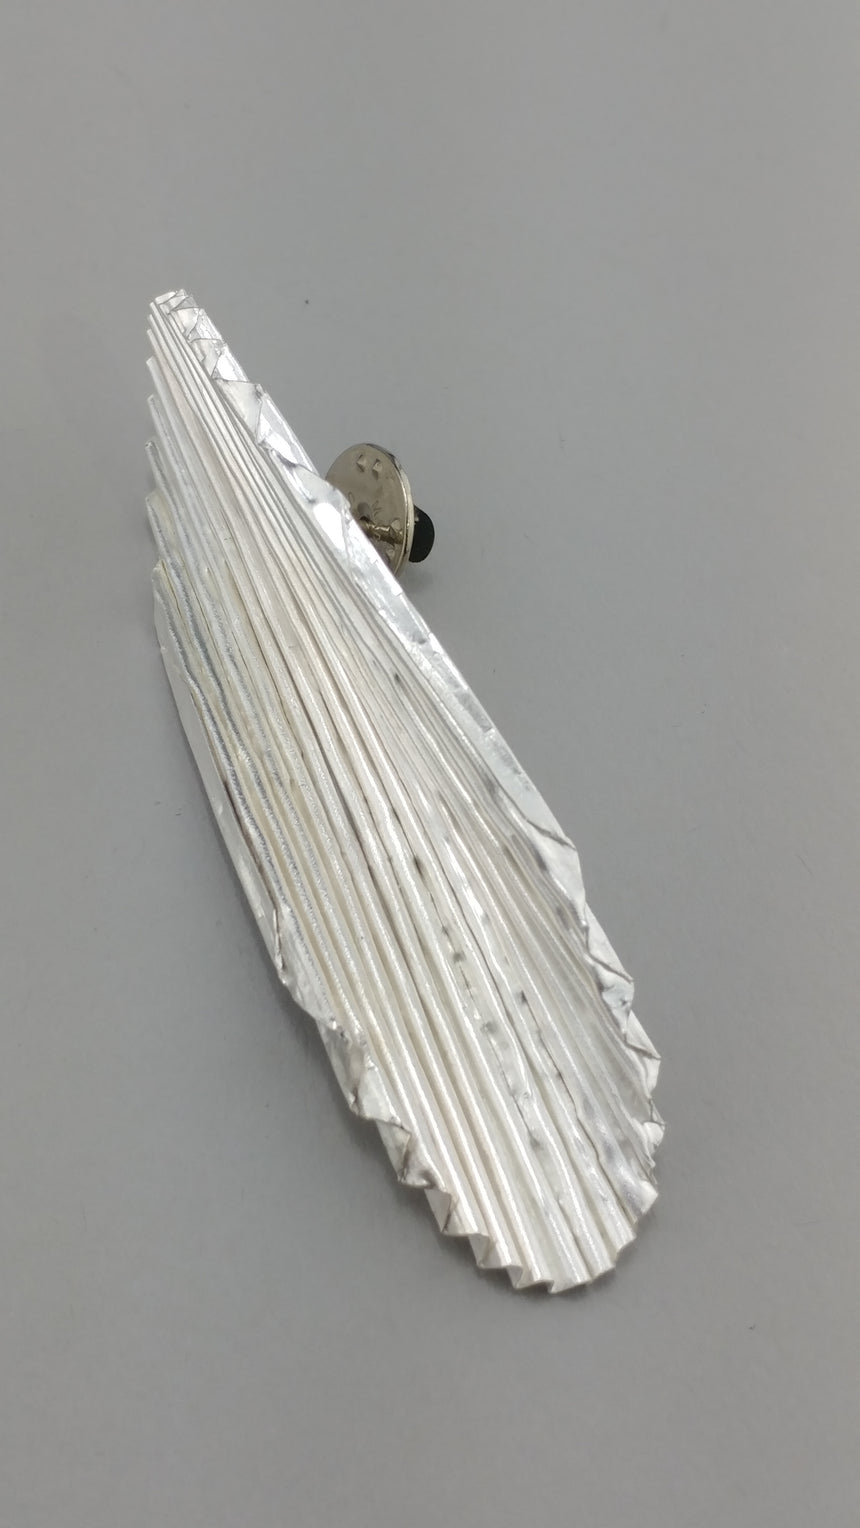 Ruffled Silk Fold Formed Corrugated Wavy Pin Brooch, Statement Brooch, Fine Silver, Looks like a Chip Brooch